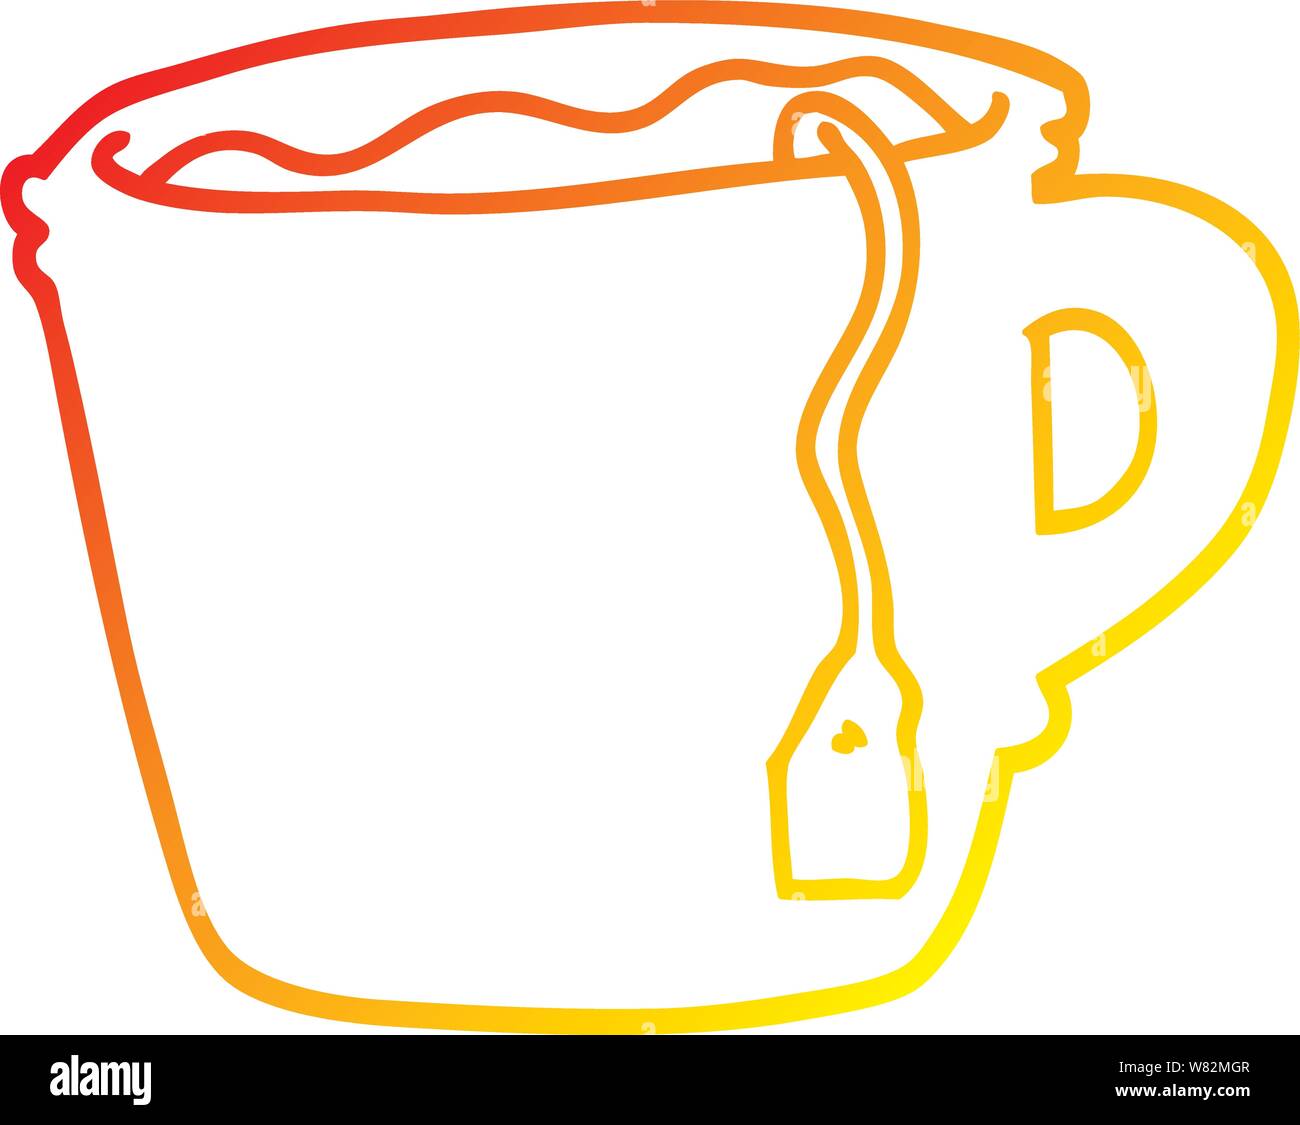 https://c8.alamy.com/comp/W82MGR/warm-gradient-line-drawing-of-a-cartoon-hot-cup-of-tea-W82MGR.jpg